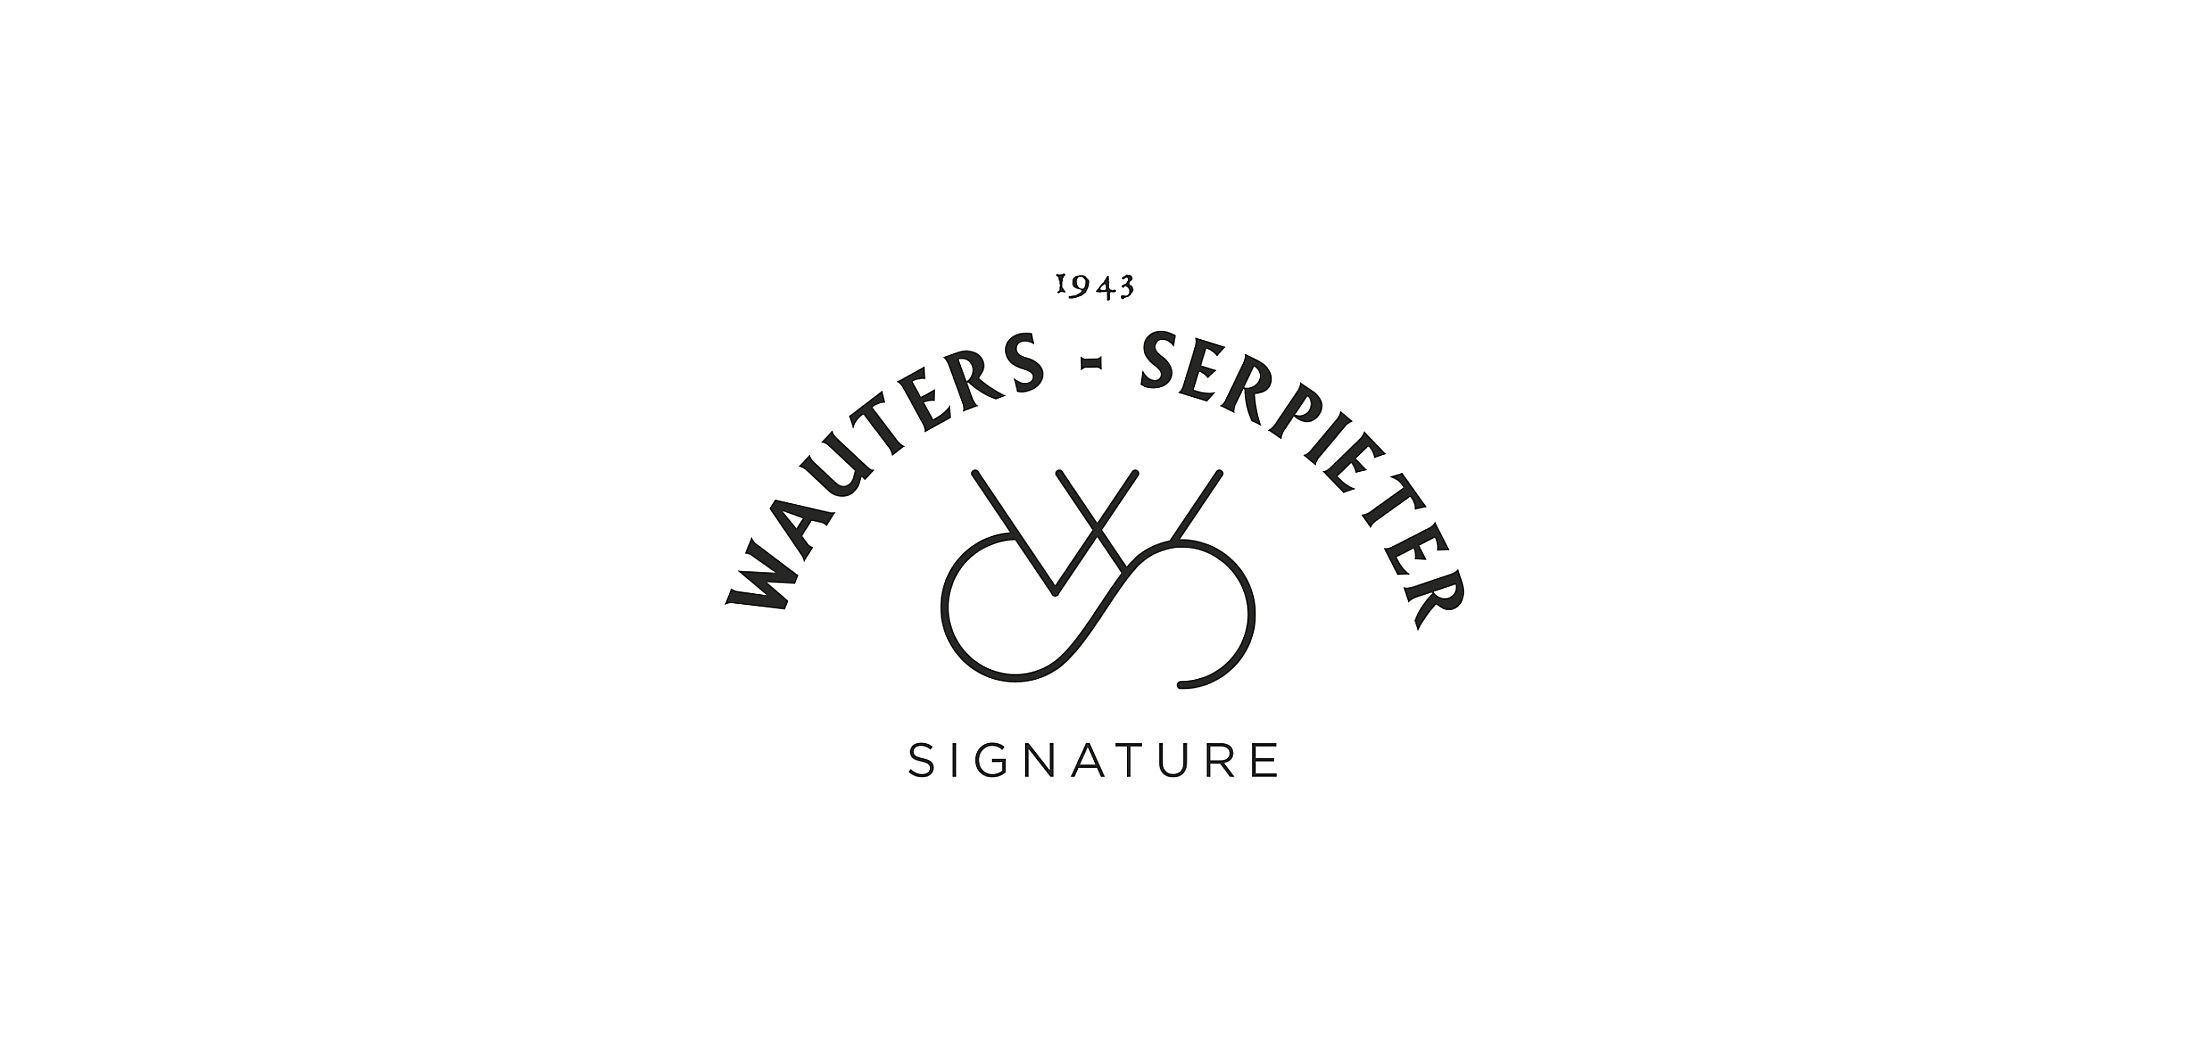 Wauters and Serpieter